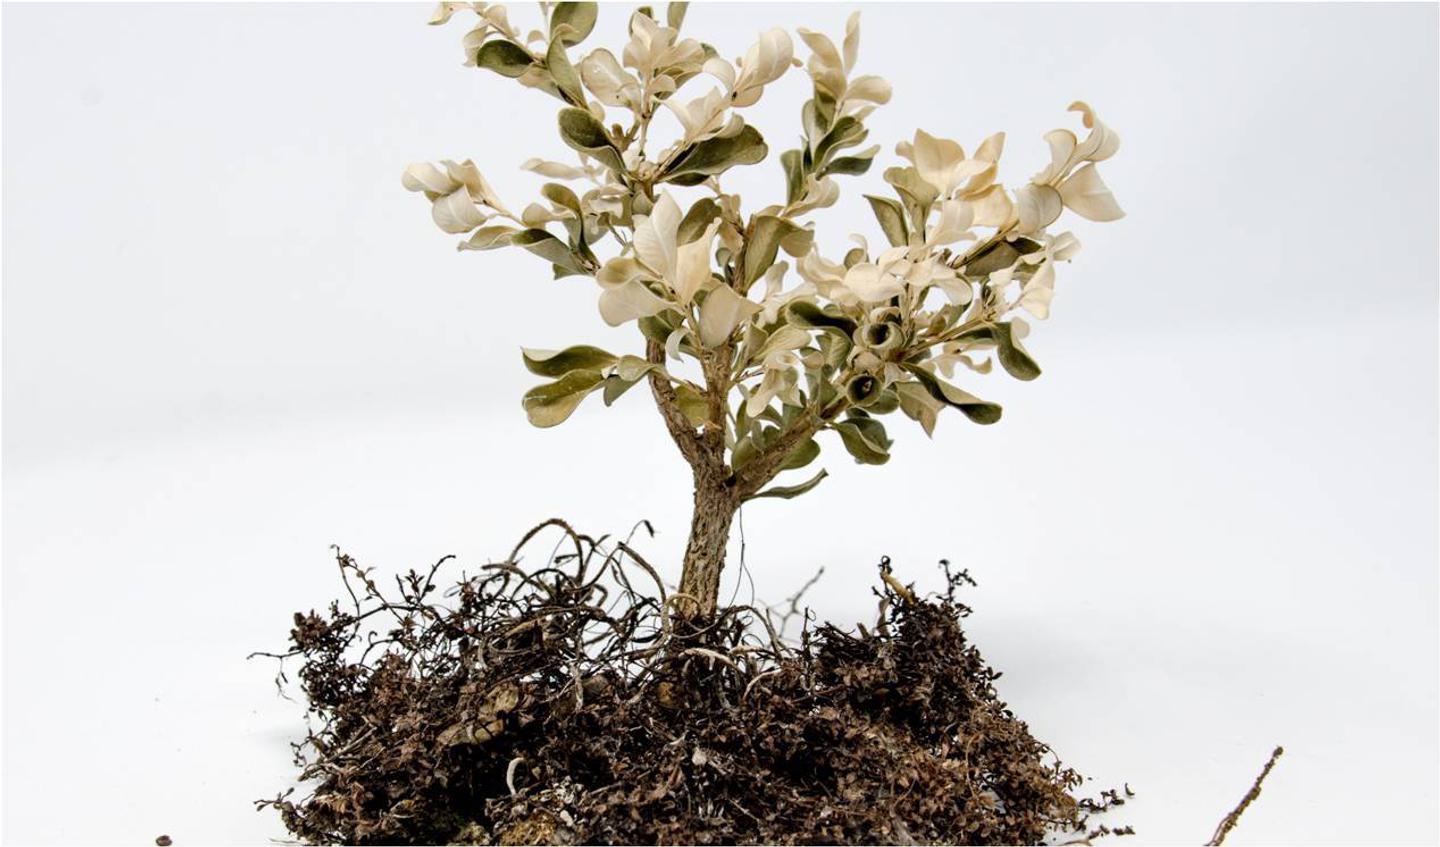 Dead buxus bonsai2